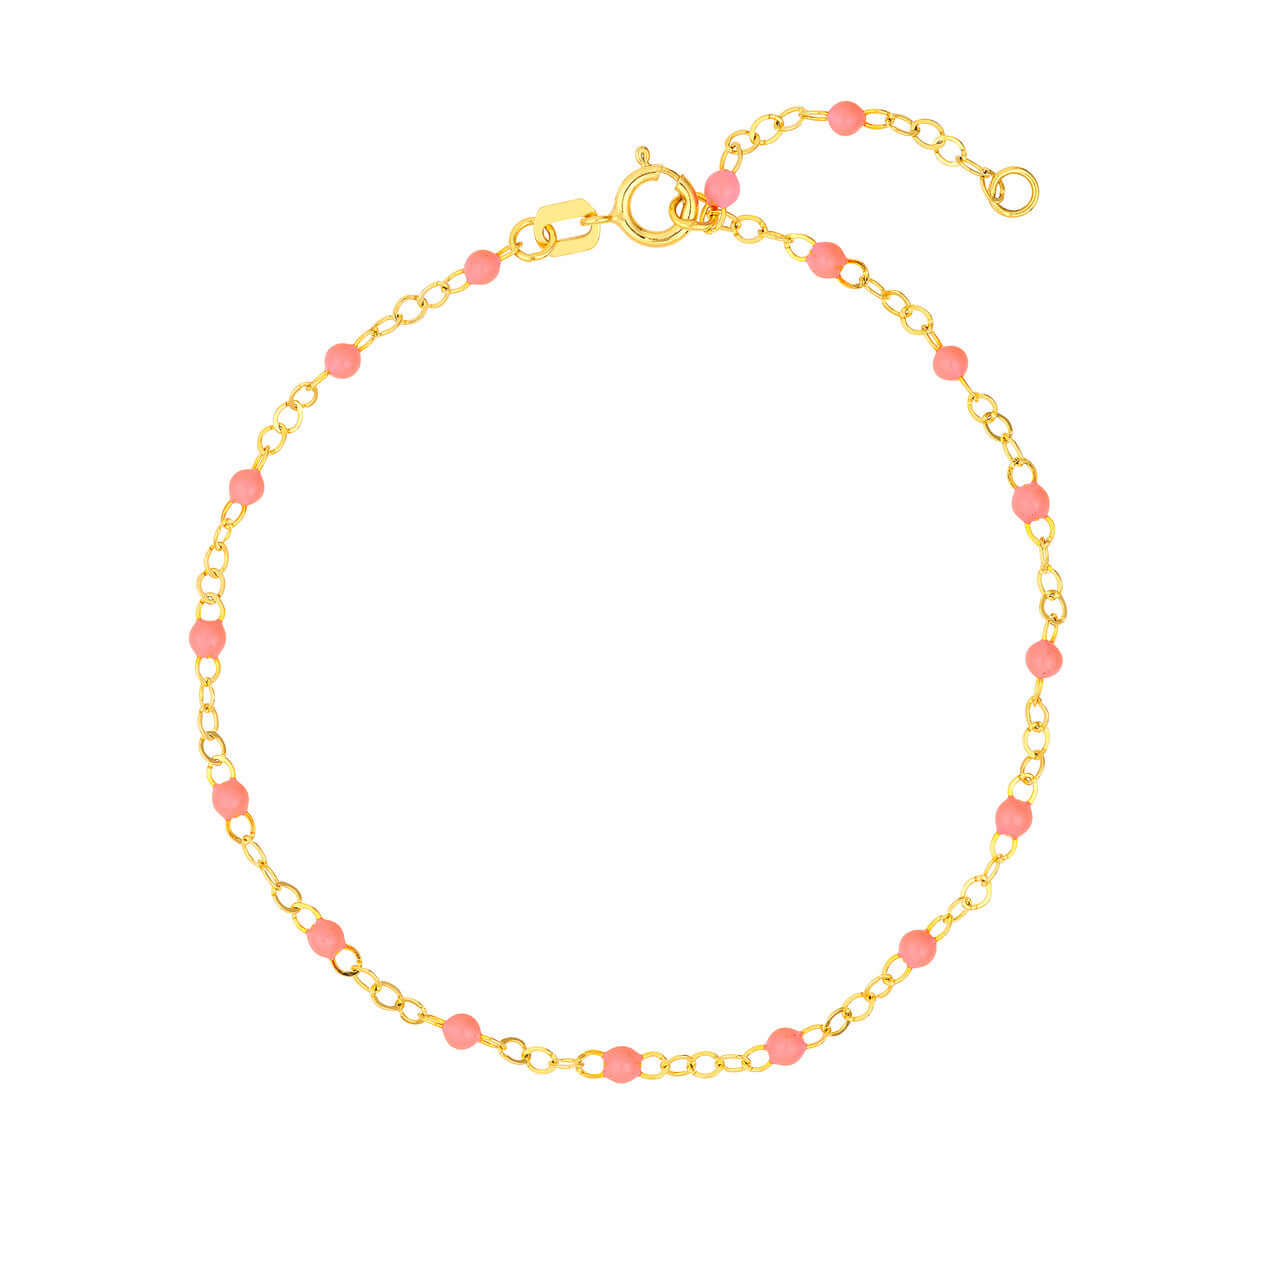 Baby Pink Enamel Bead Piatto Chain Bracelet